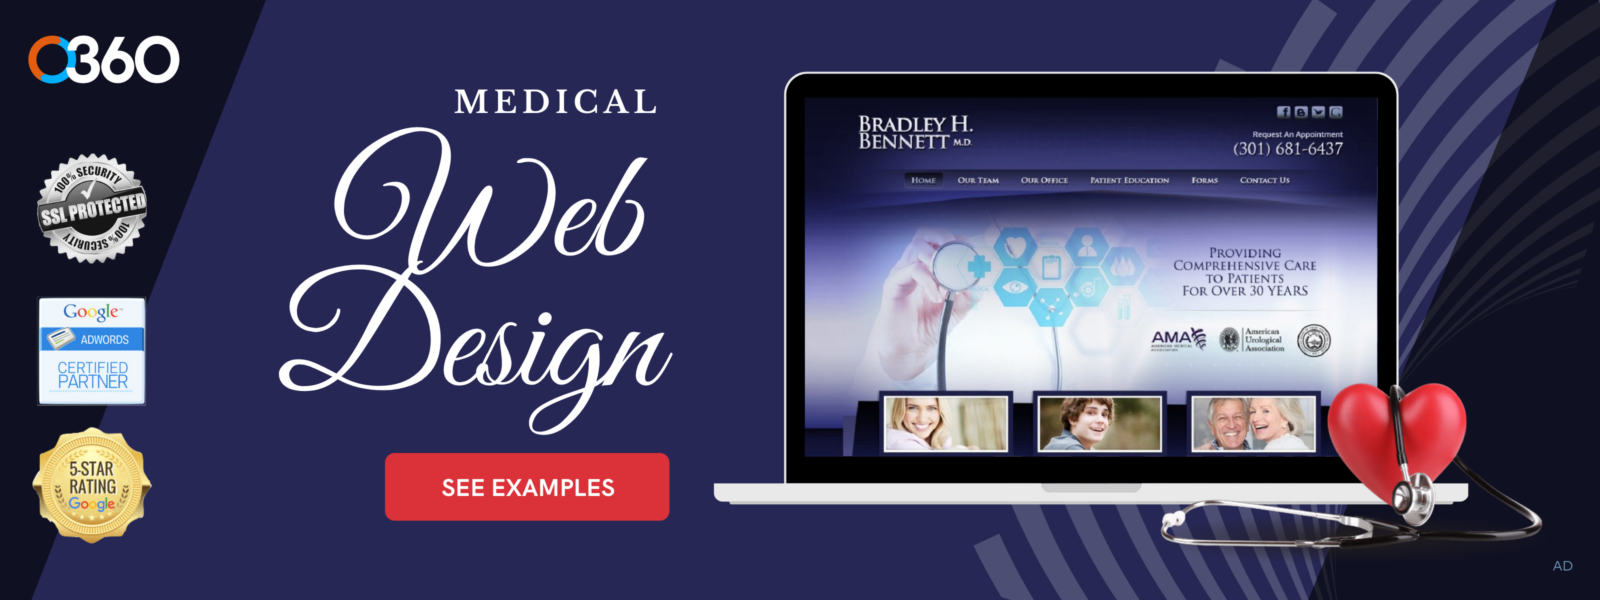 Cardiology medical web design o360 ad